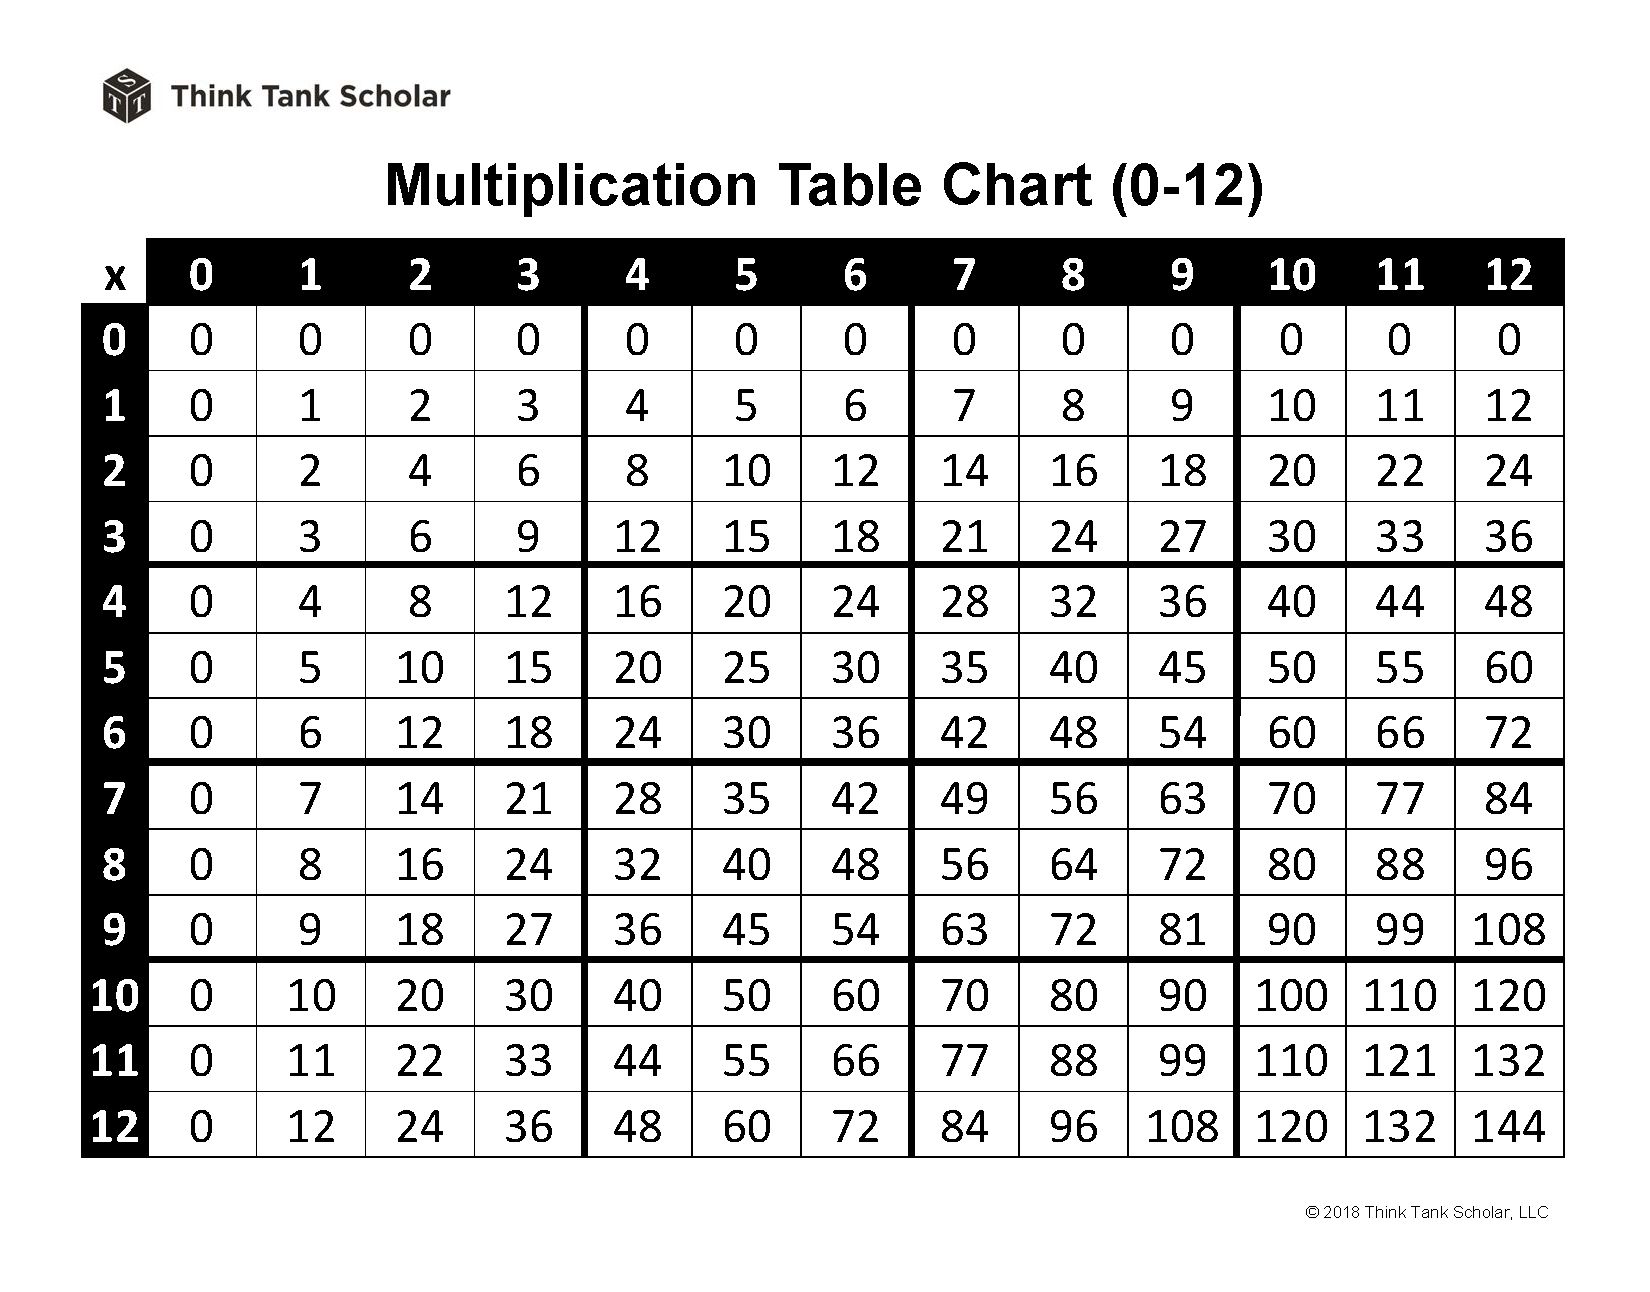 demonstration-imply-morgue-table-de-multiplication-de-22-loosely-hand